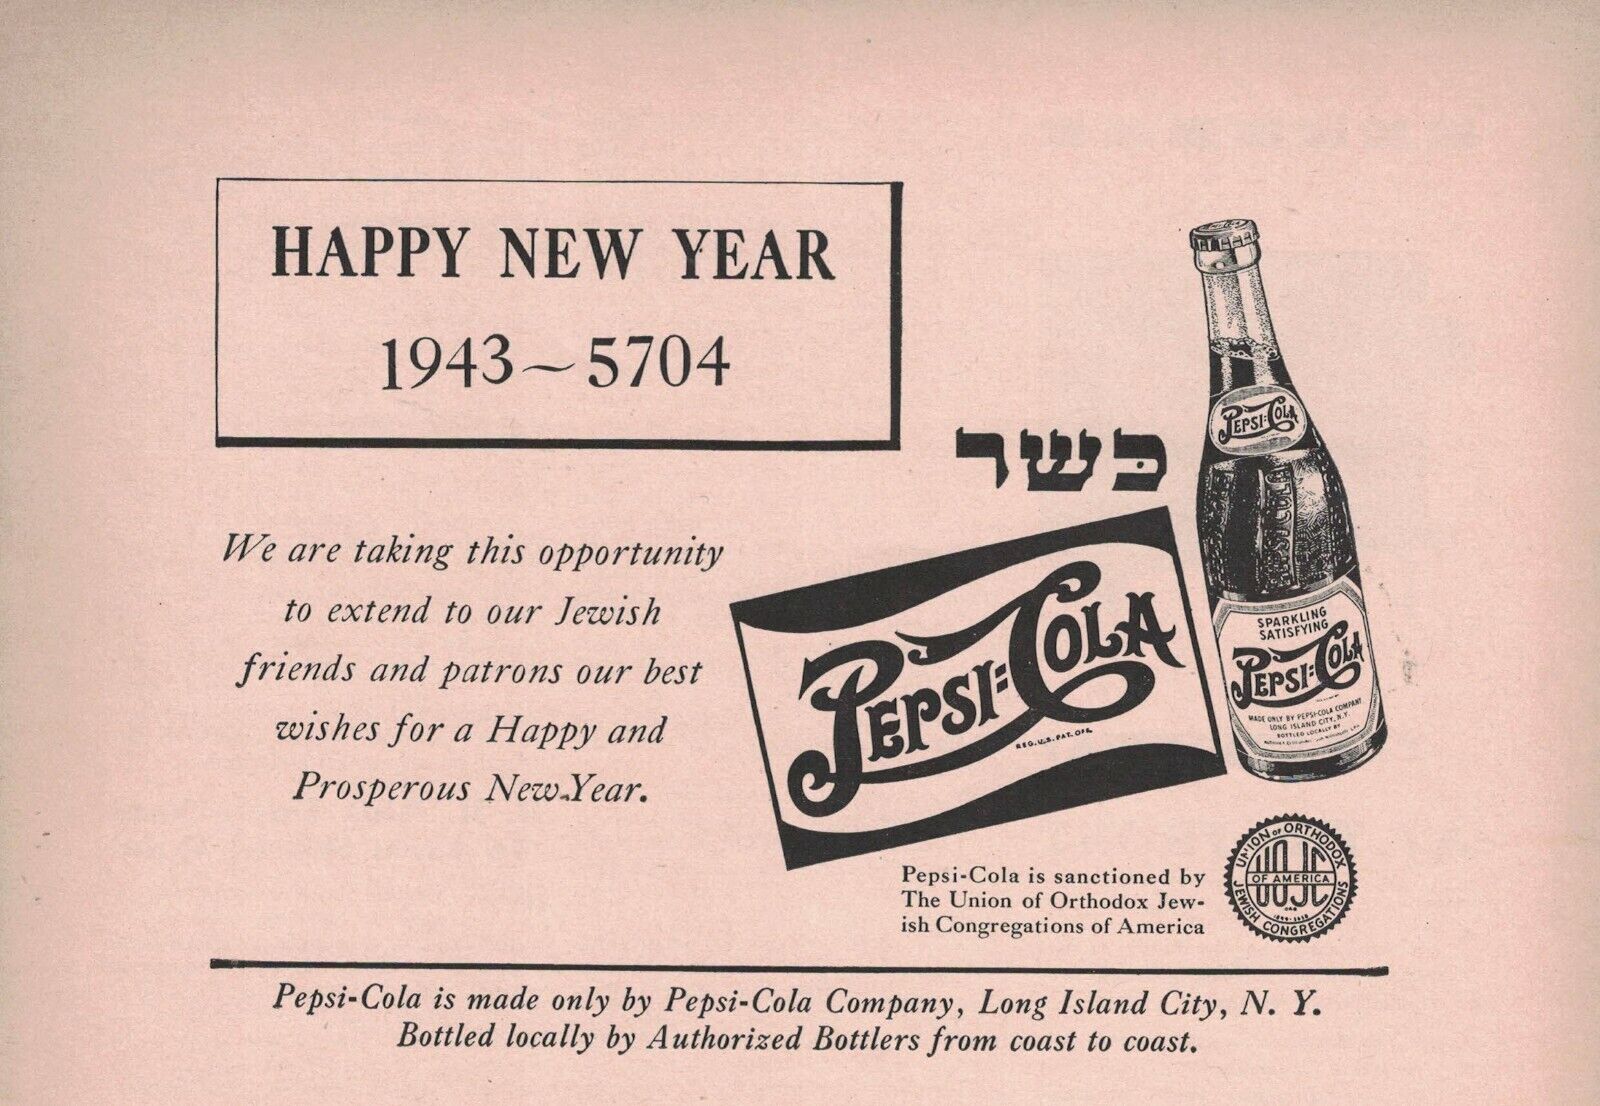 1943 Pepsi Cola Original Jewish ad Happy New year 1943-5704 - Extremely rare